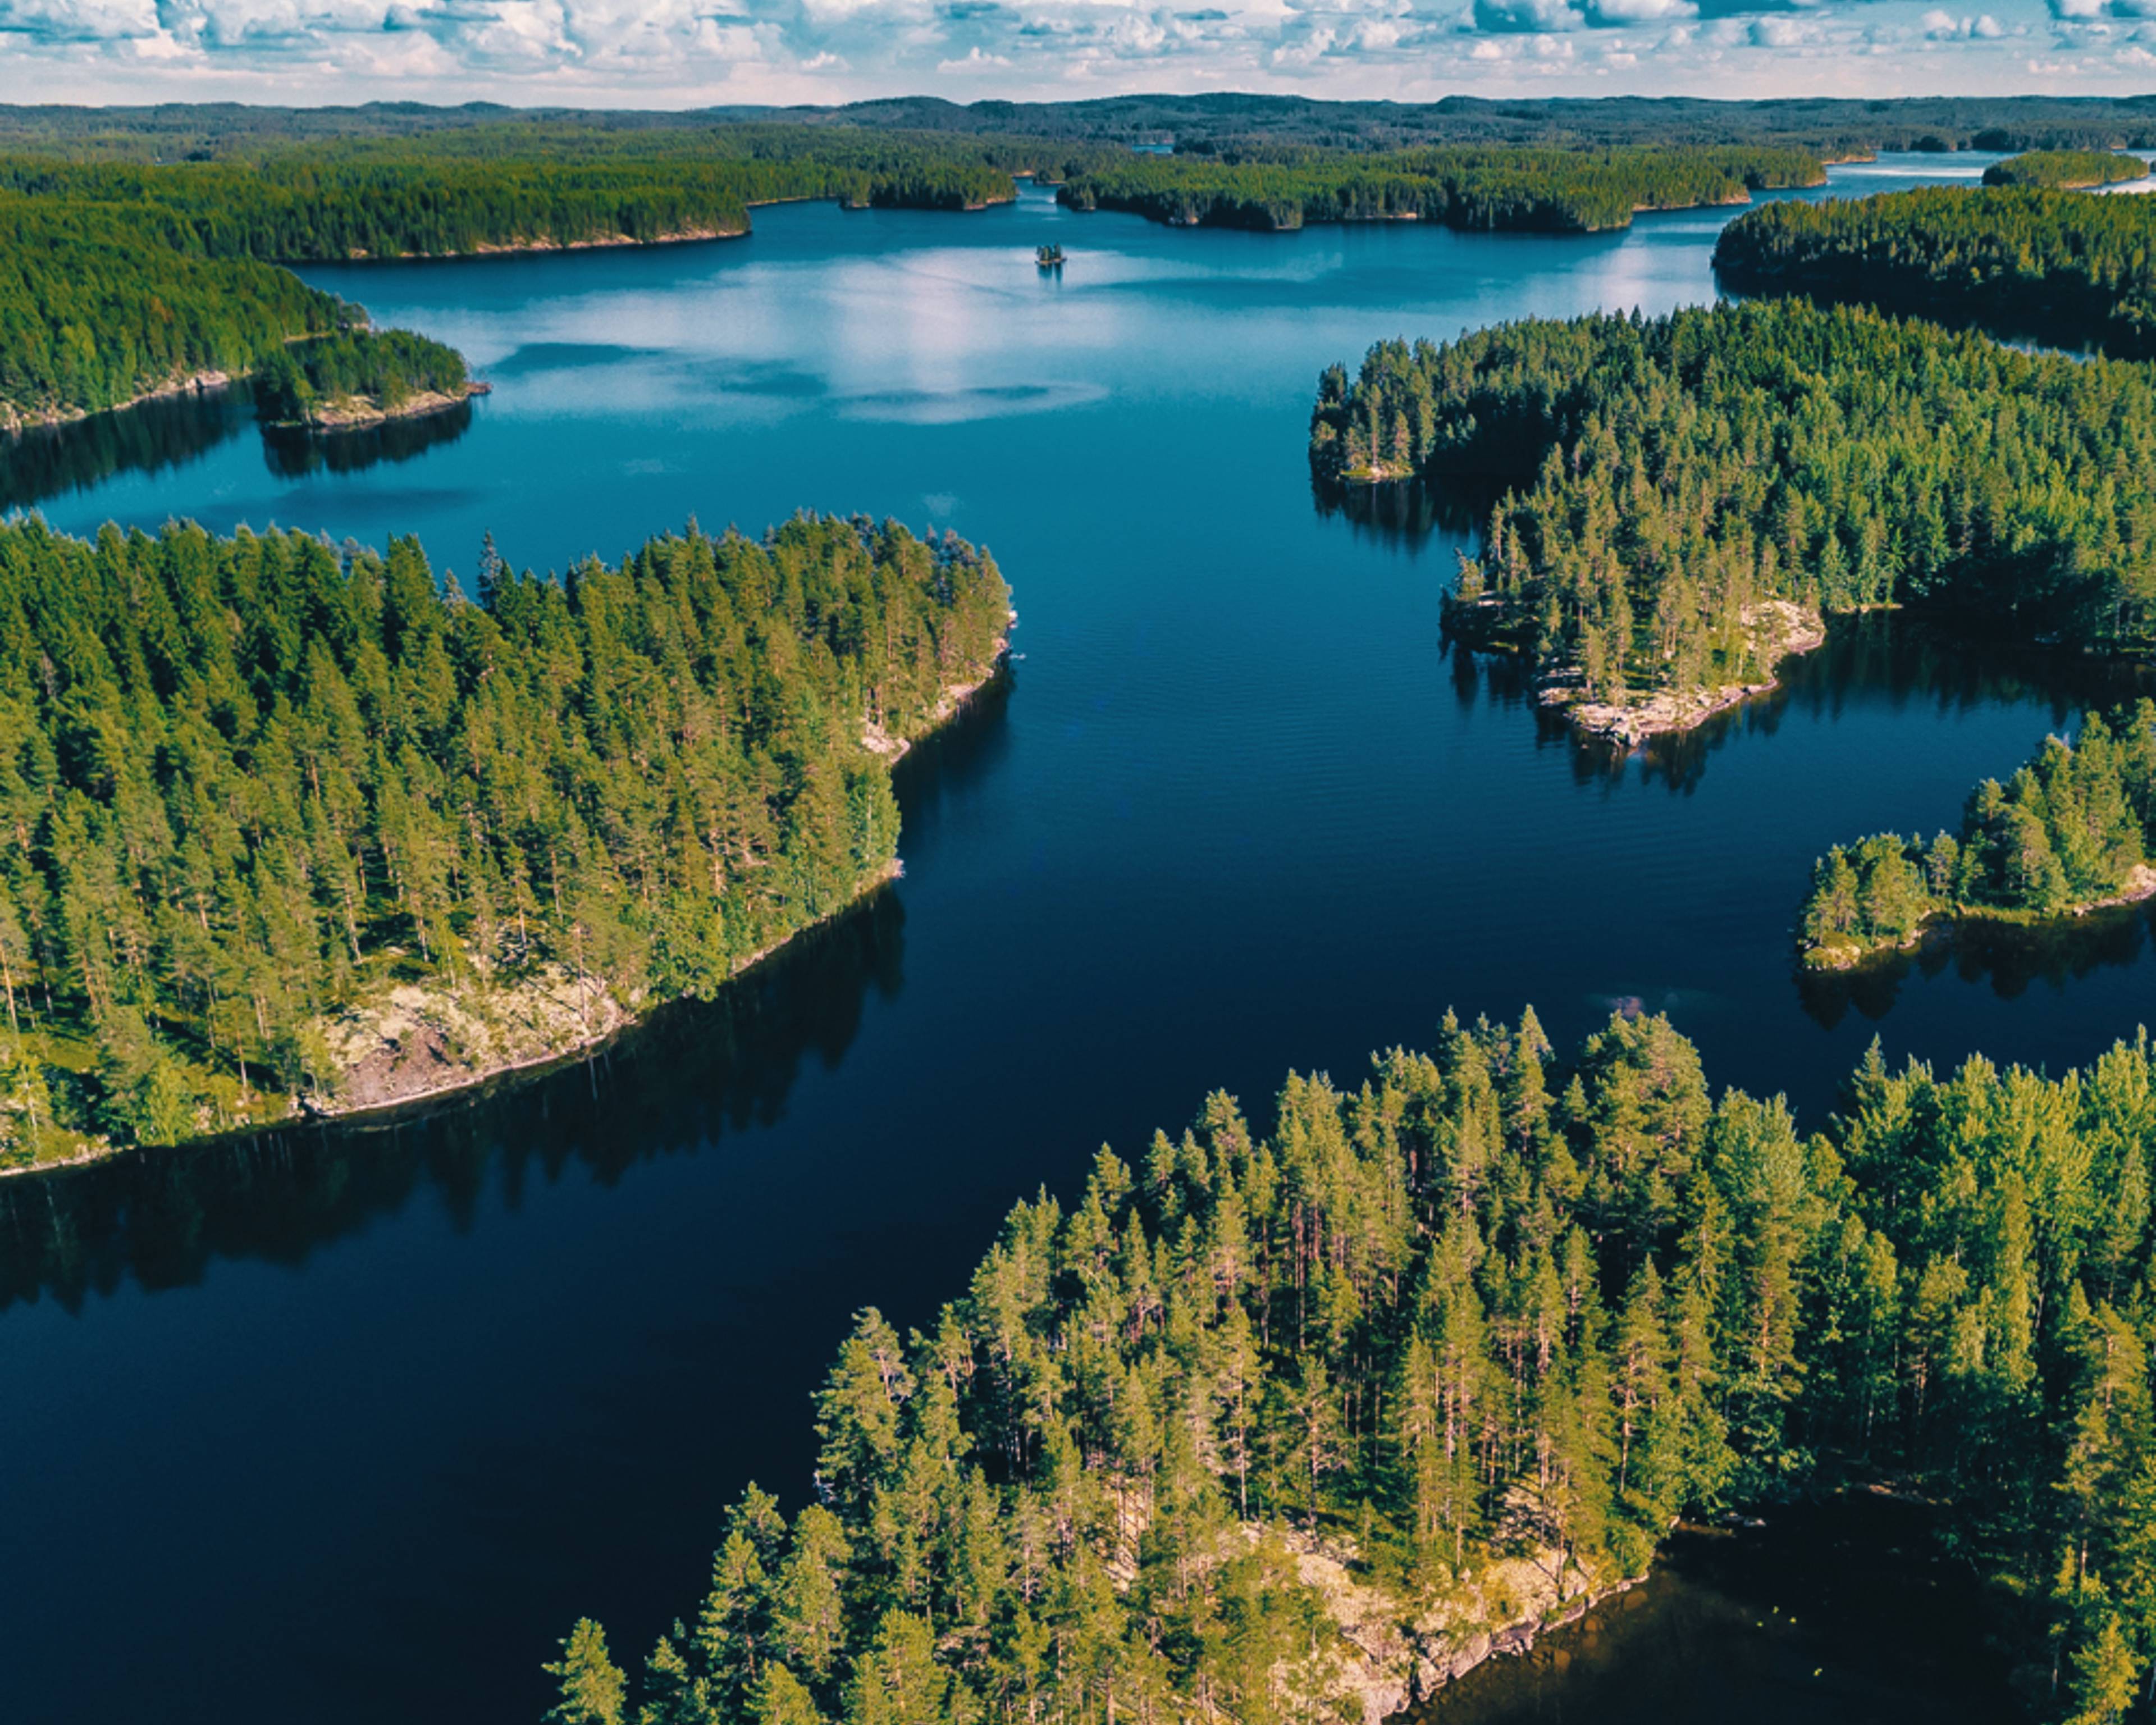 Viajes de naturaleza a Finlandia - Viajes a medida para disfrutar al aire libre